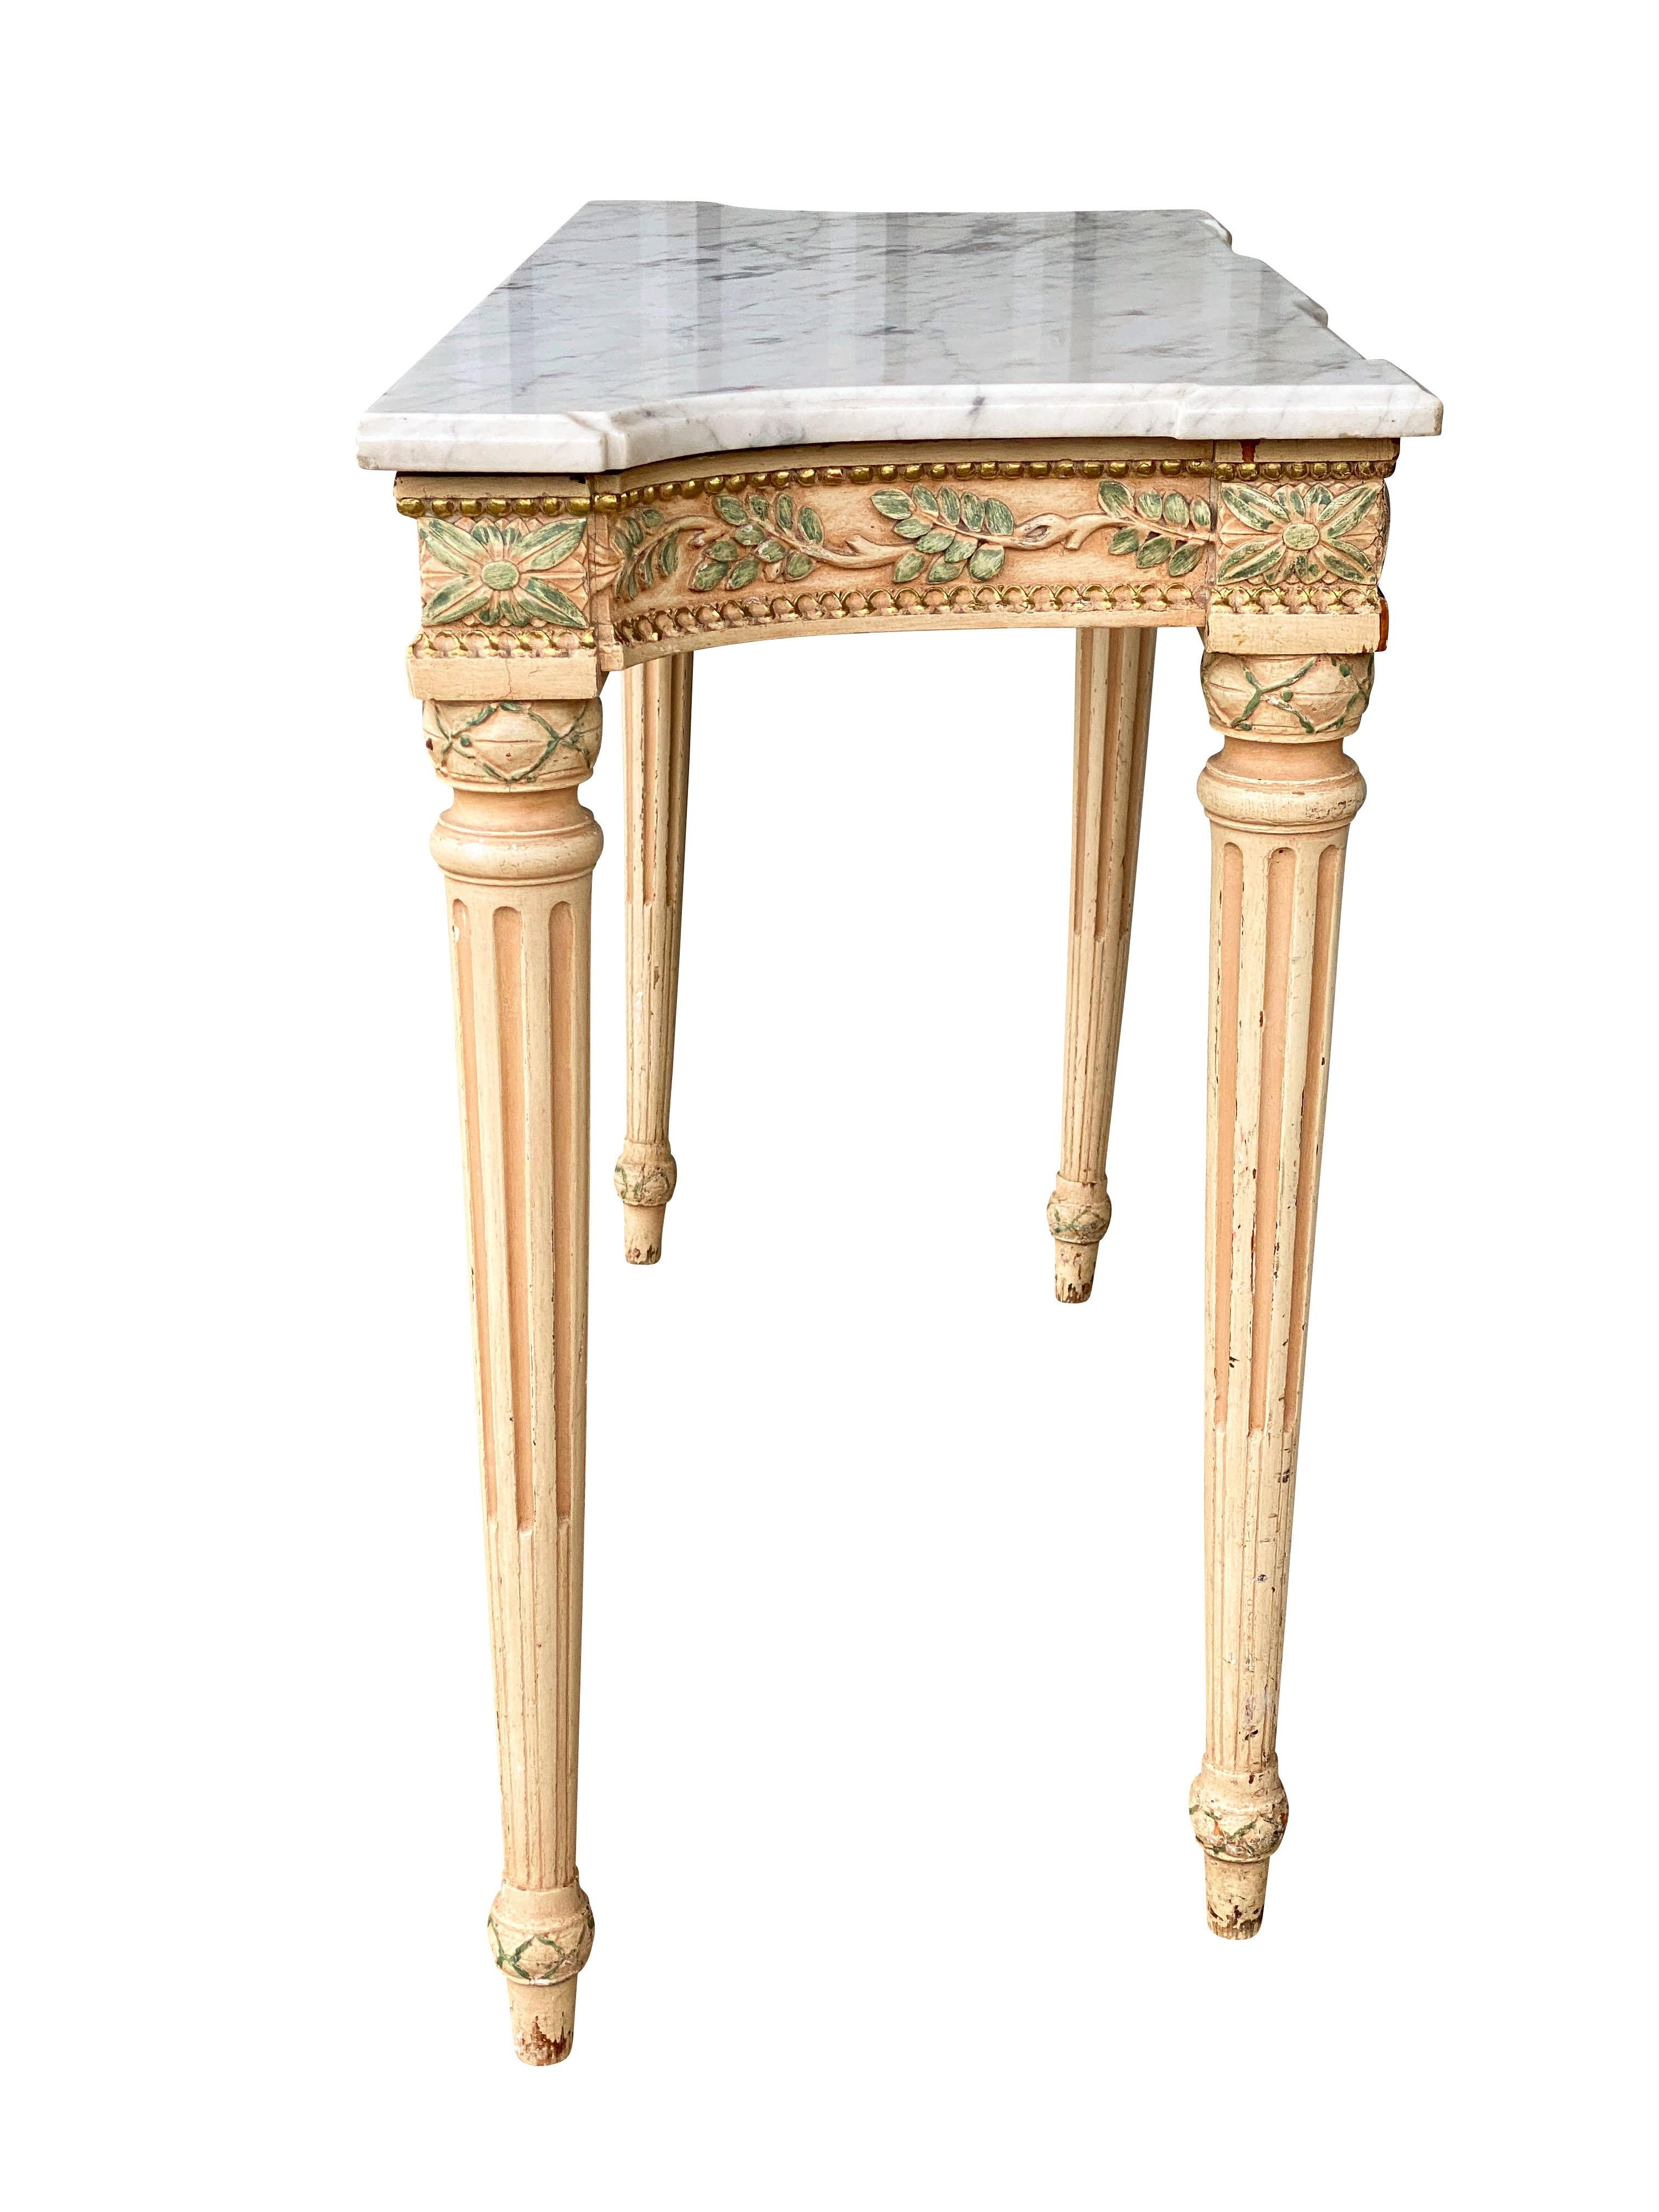 Painted Maison Jansen Louis XVI Style Marble-Top Console Table